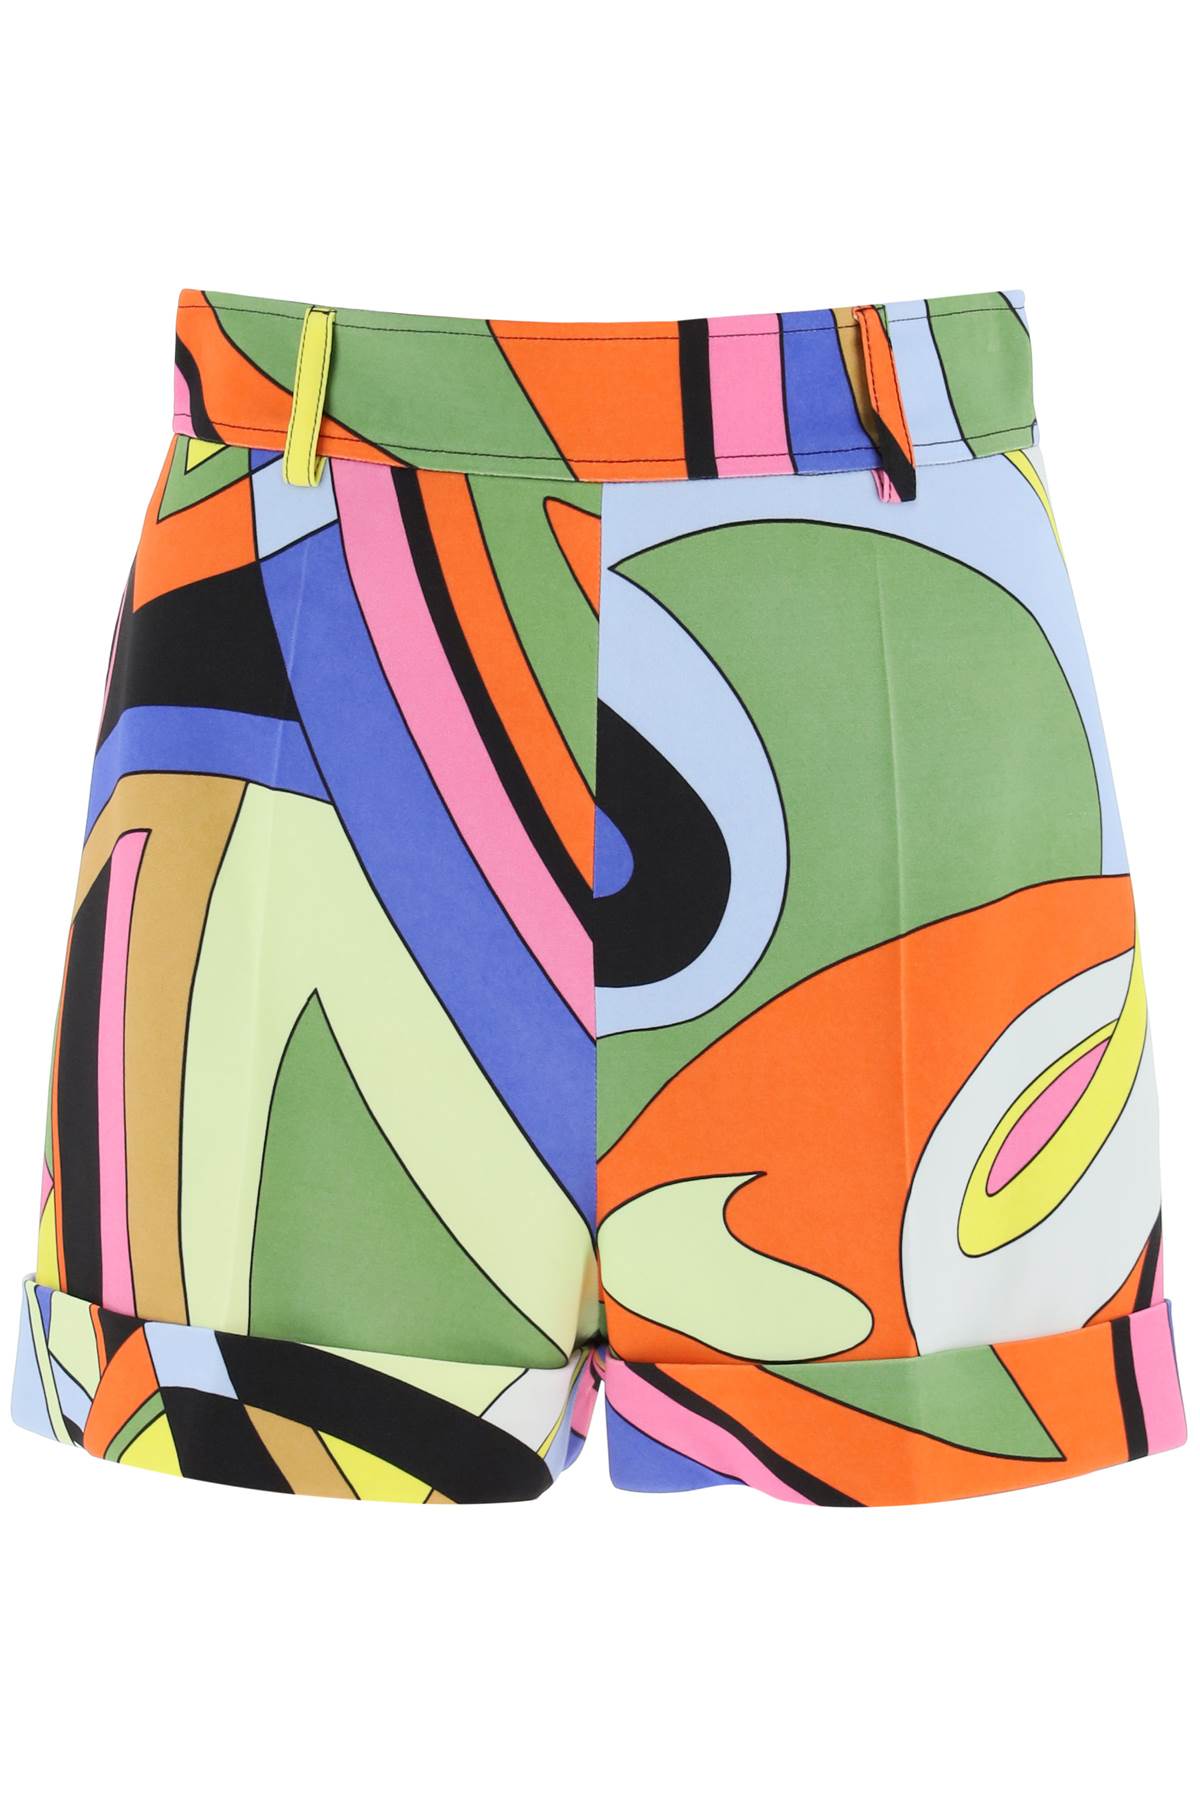 Moschino multicolor printed shorts A0313 0555 FANTASIA VARIANTE UNICA